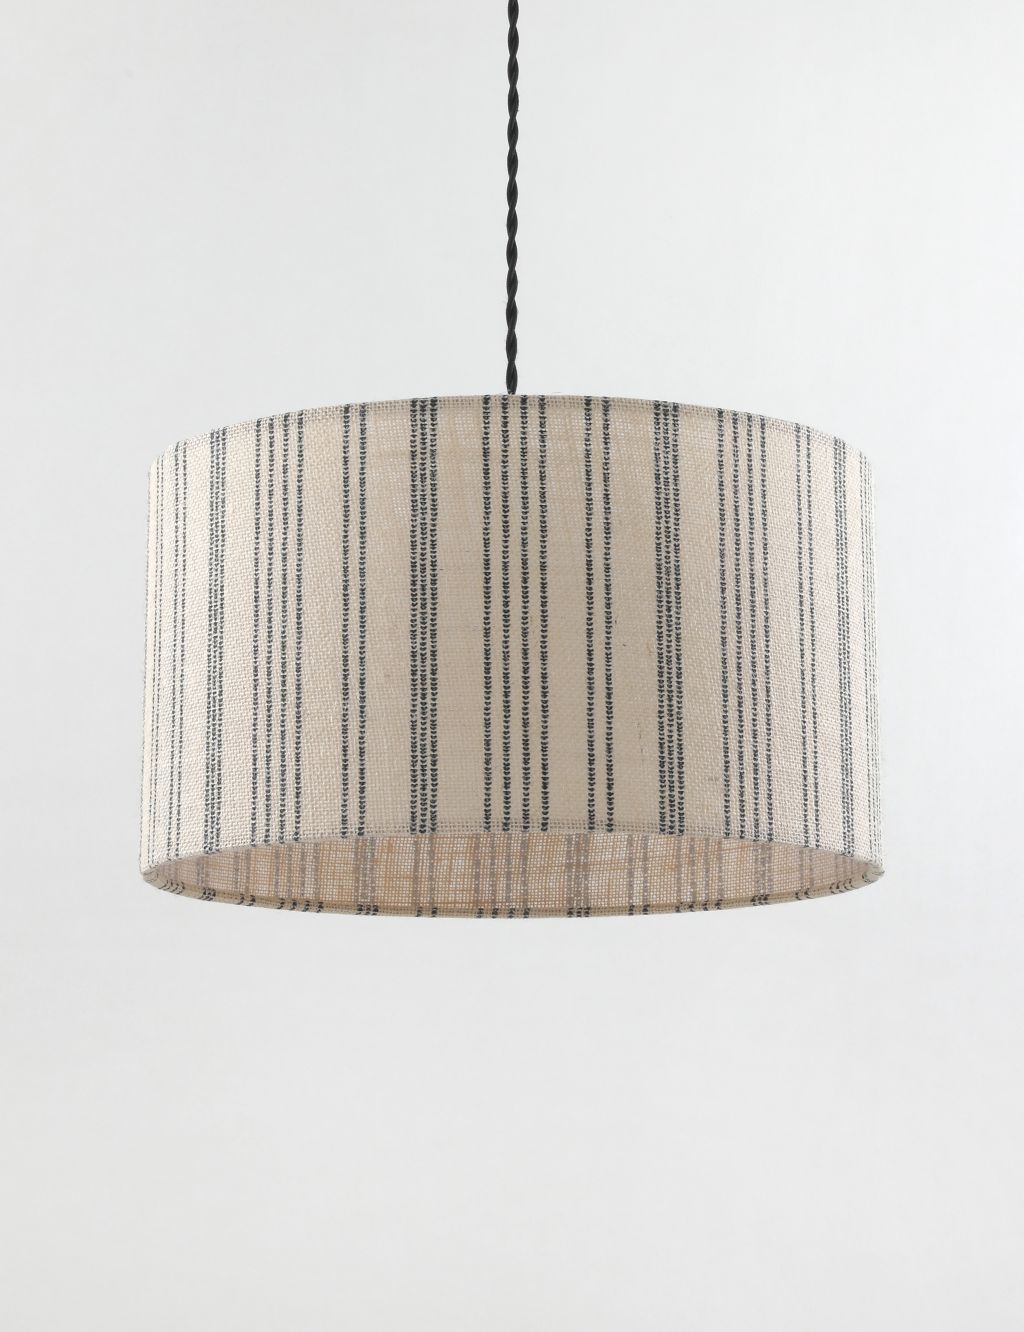 Noah Hessian Striped Lamp Shade